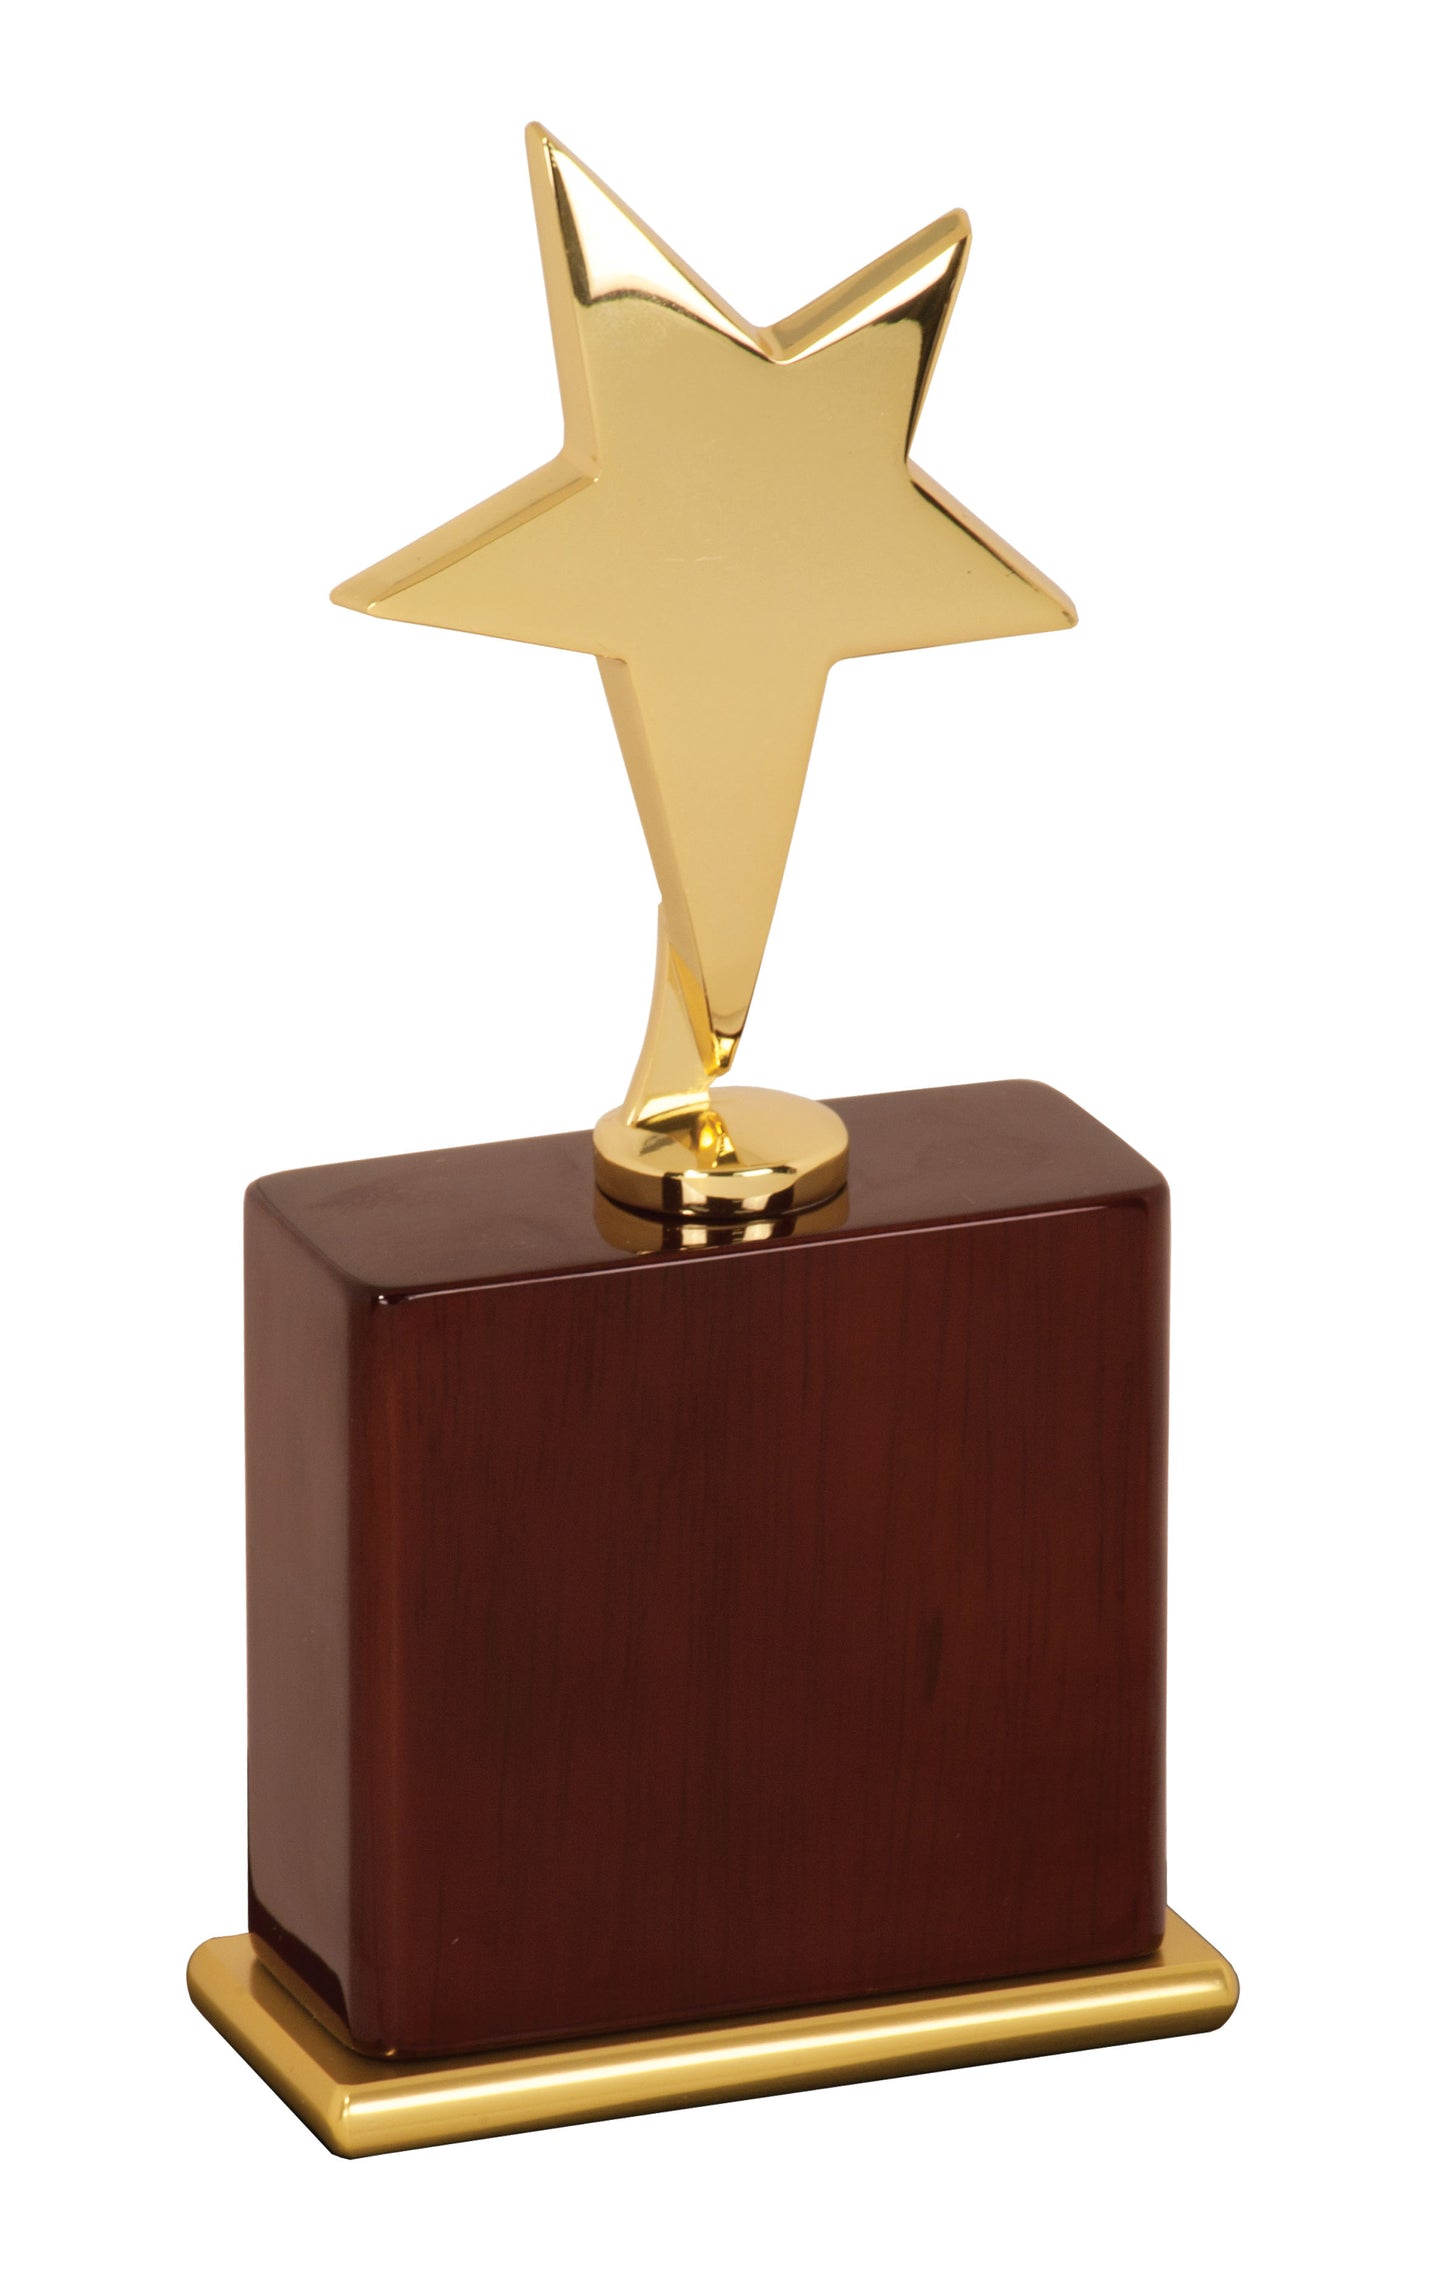 Gold Star Award on Rosewood Piano Finish Base